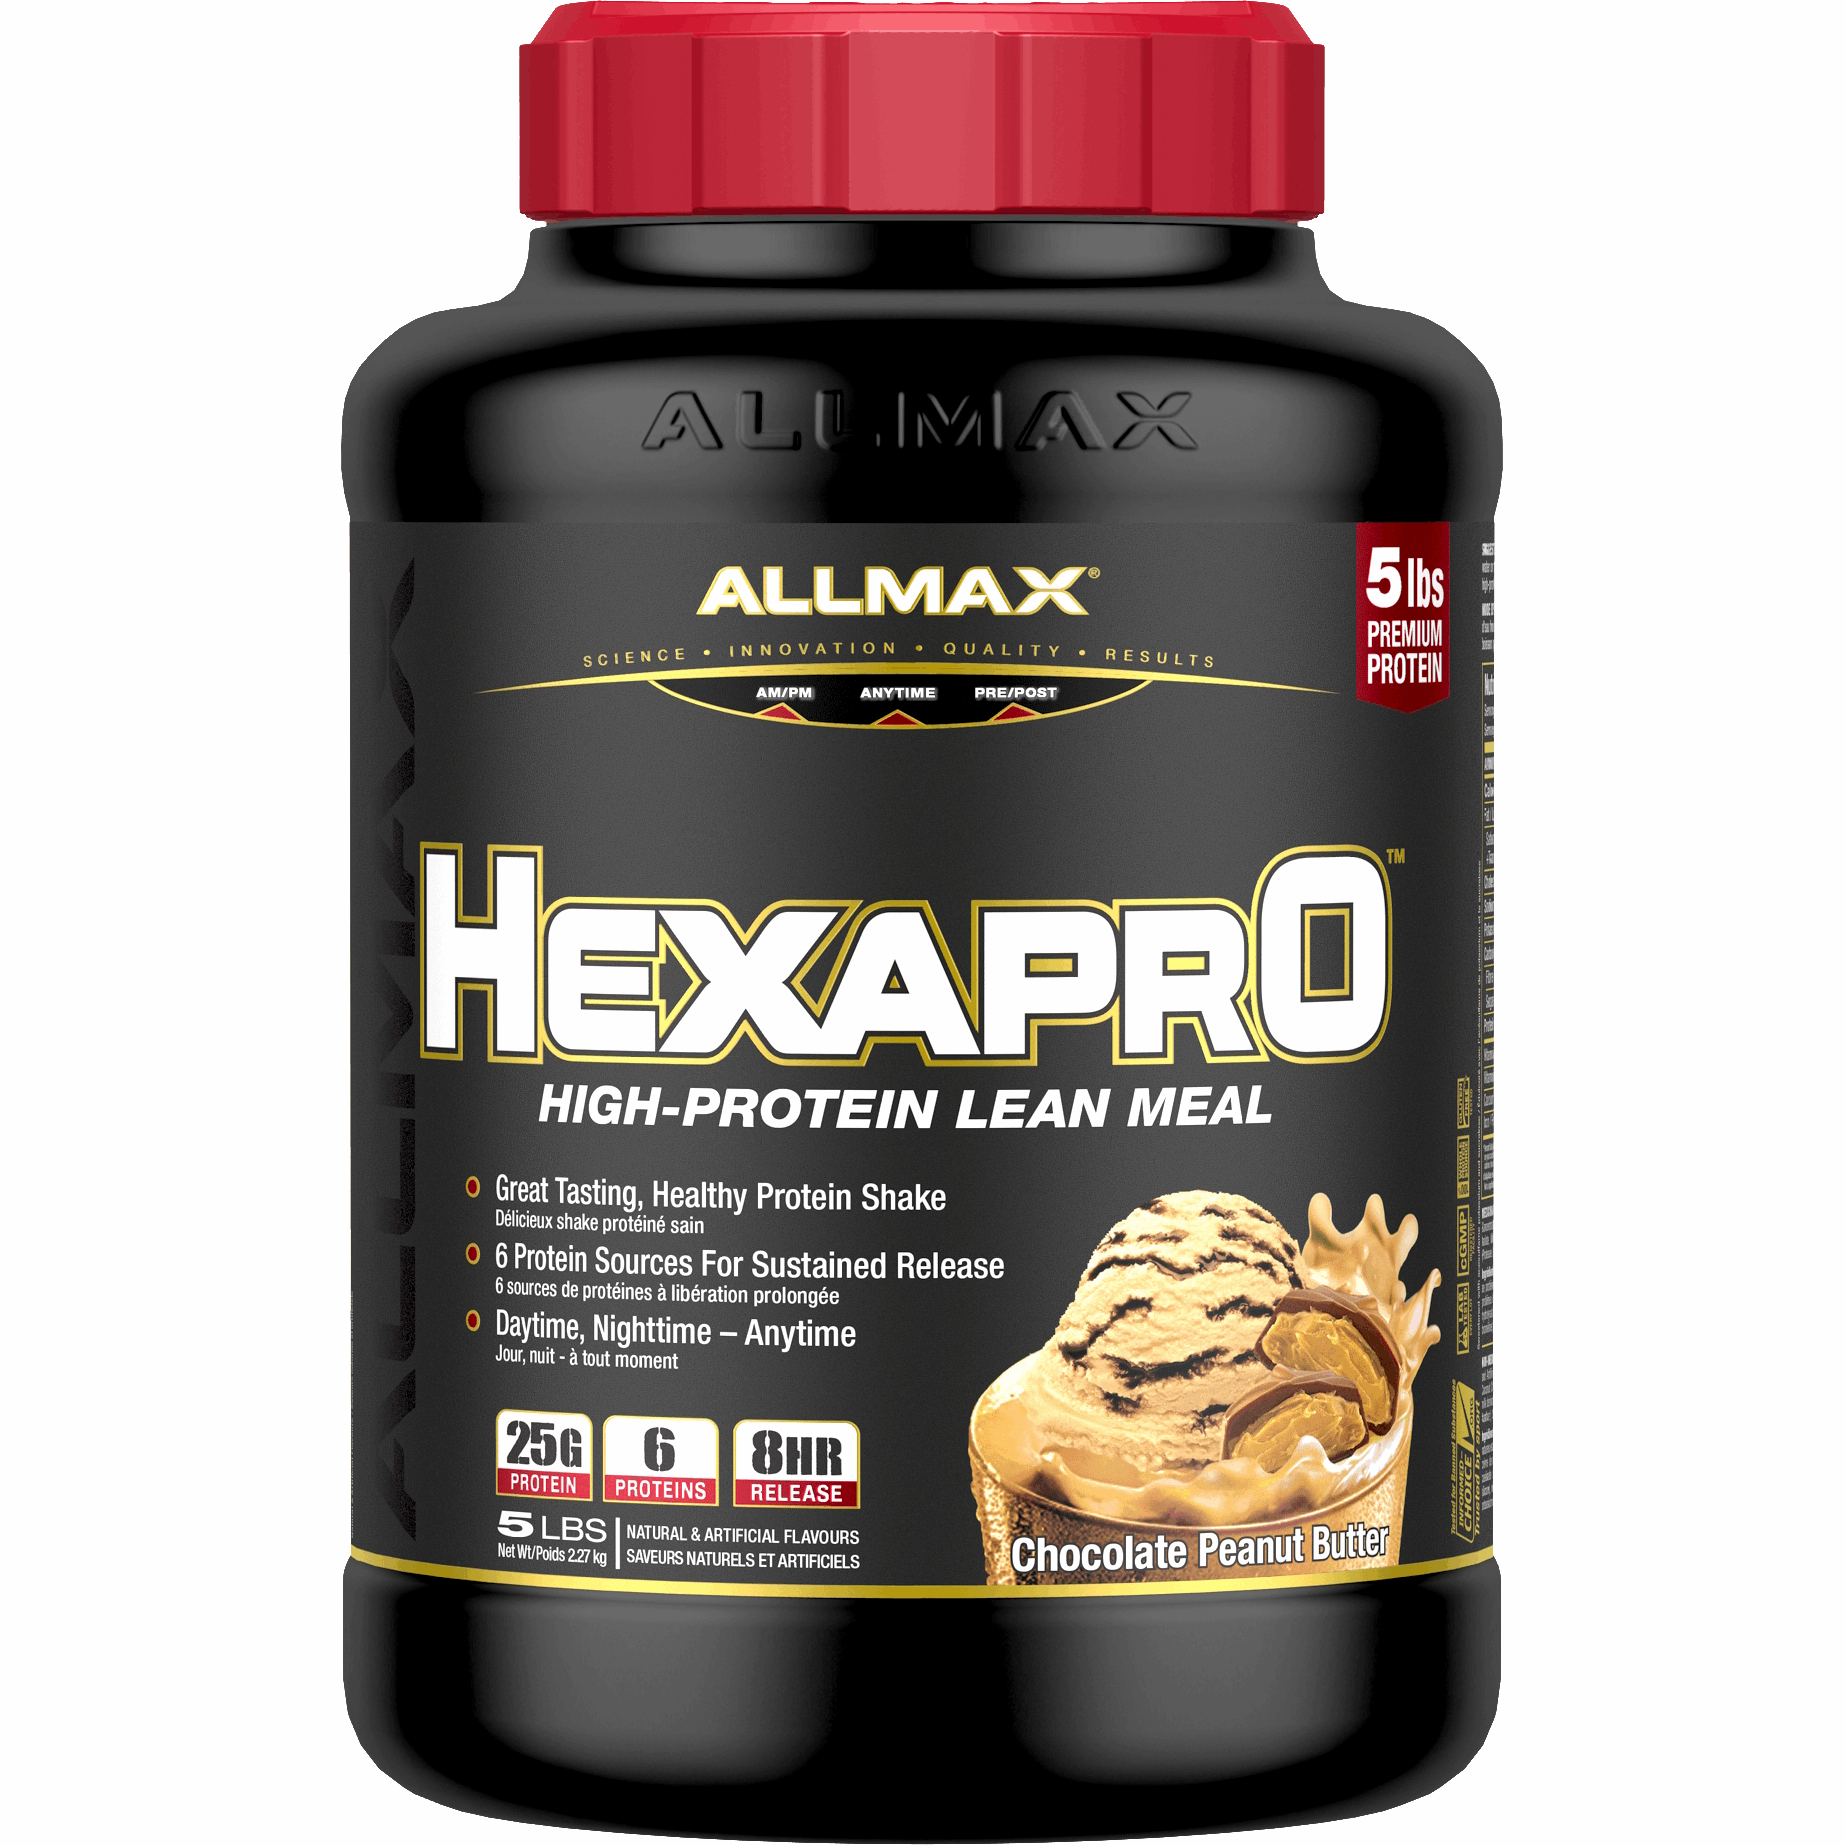 ALLMAX Hexapro (5 LBS) Whey Protein Blend Chocolate Peanut Butter Allmax Nutrition allmax-hexapro-5-5lbs